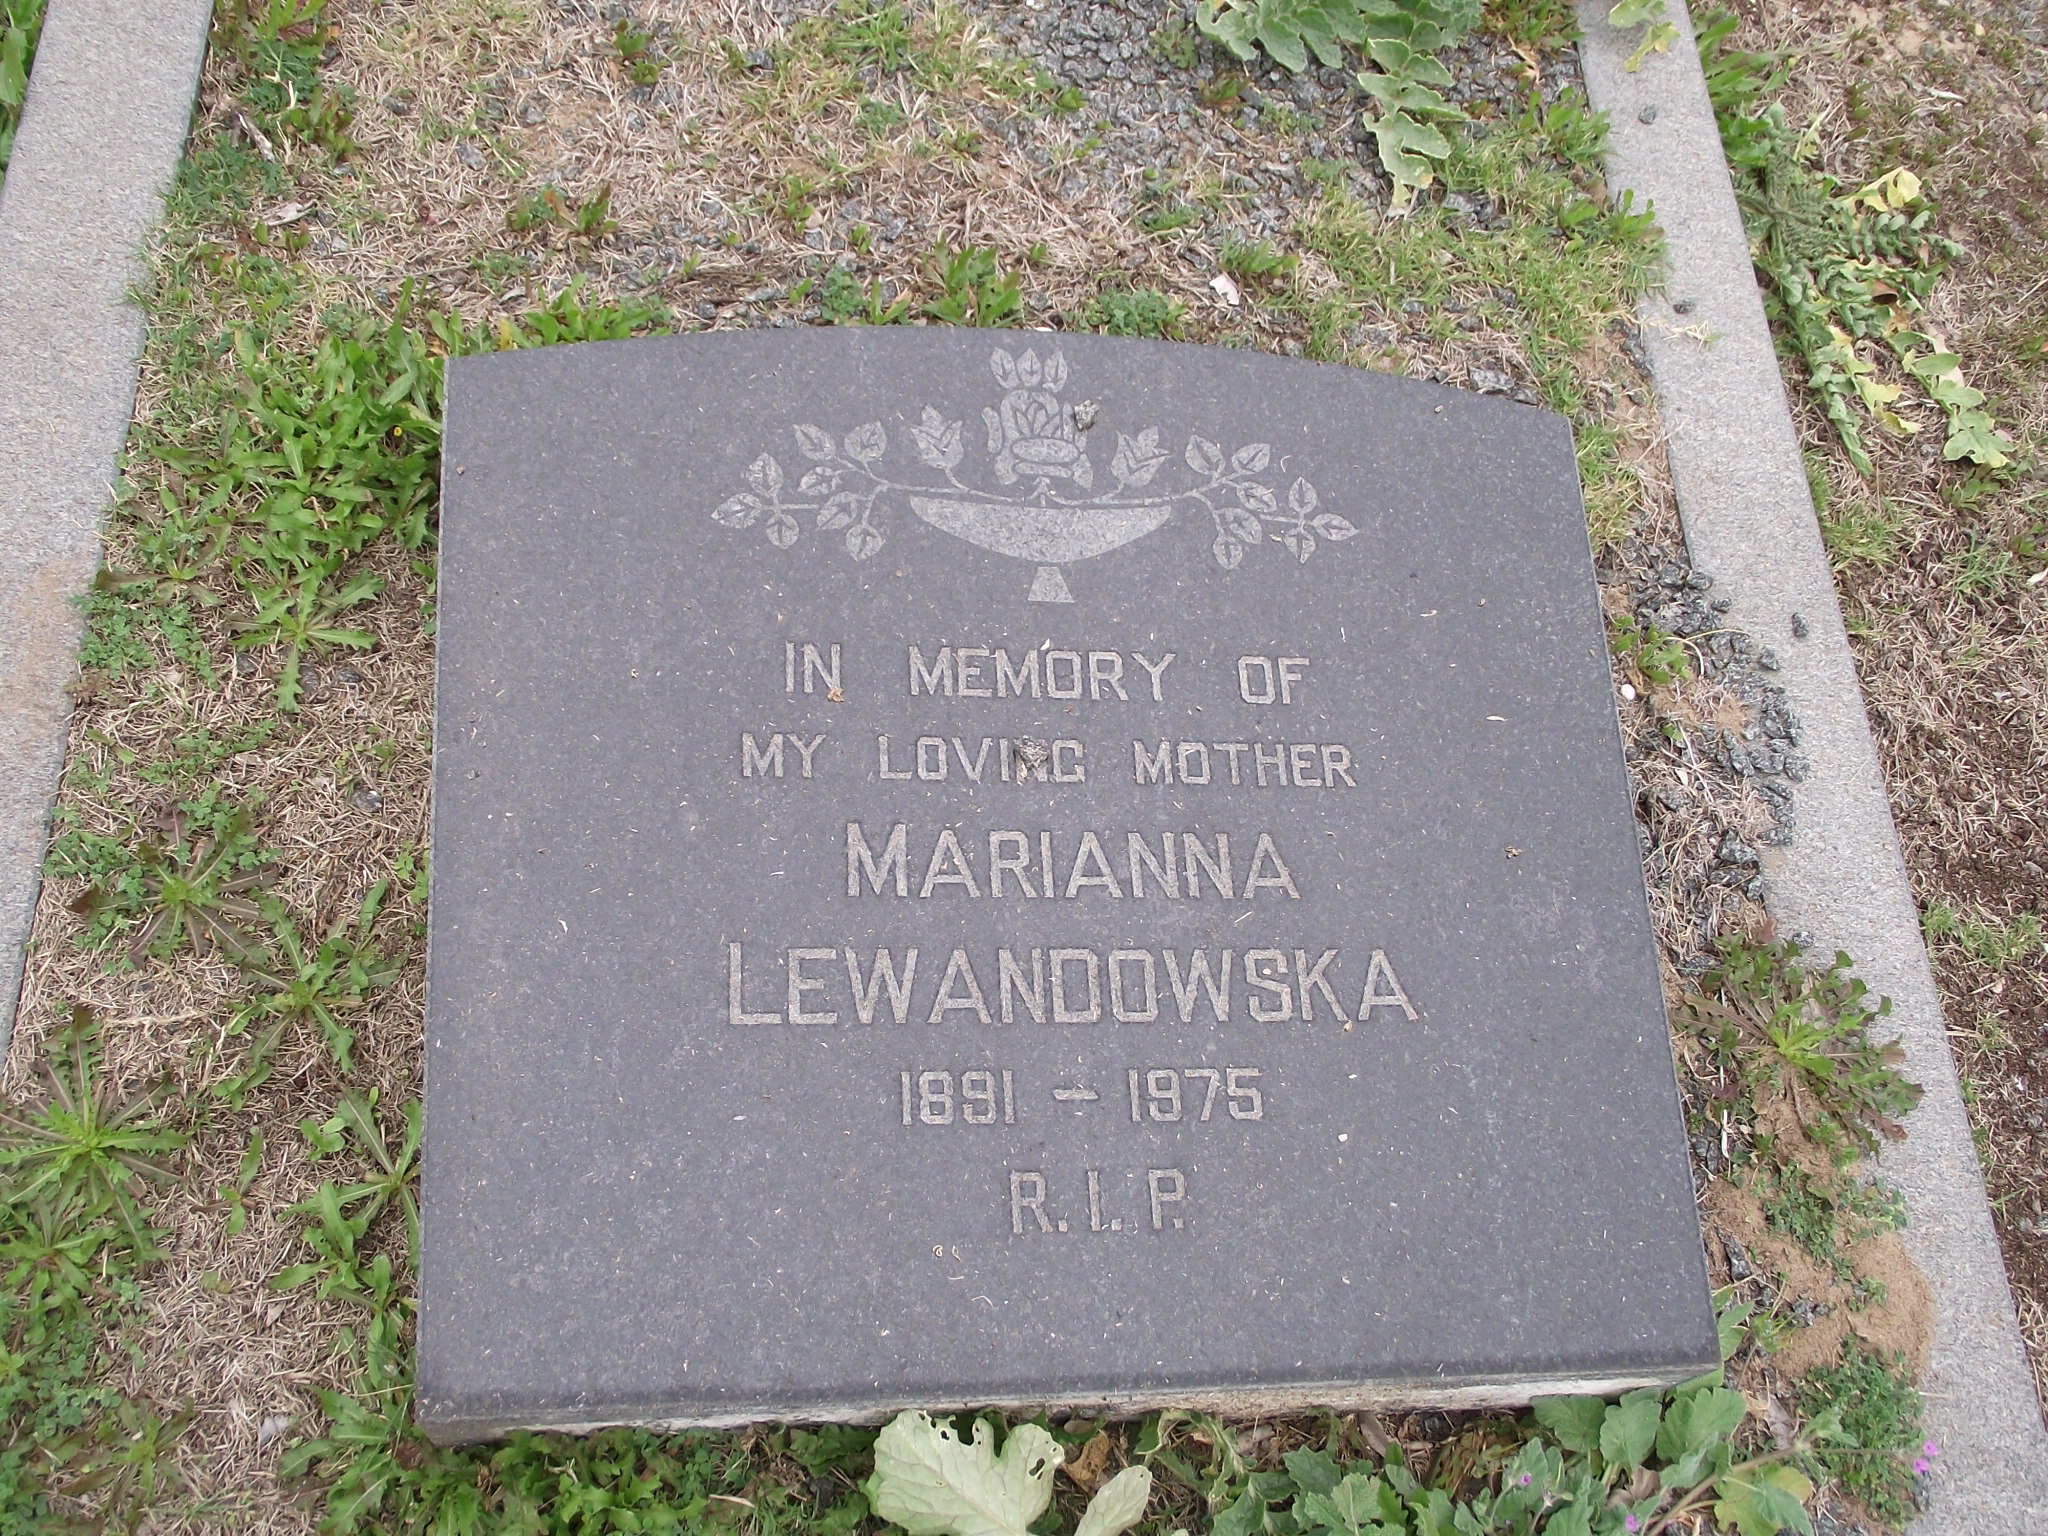 LEWANDOWSKA Marianna 1891-1975